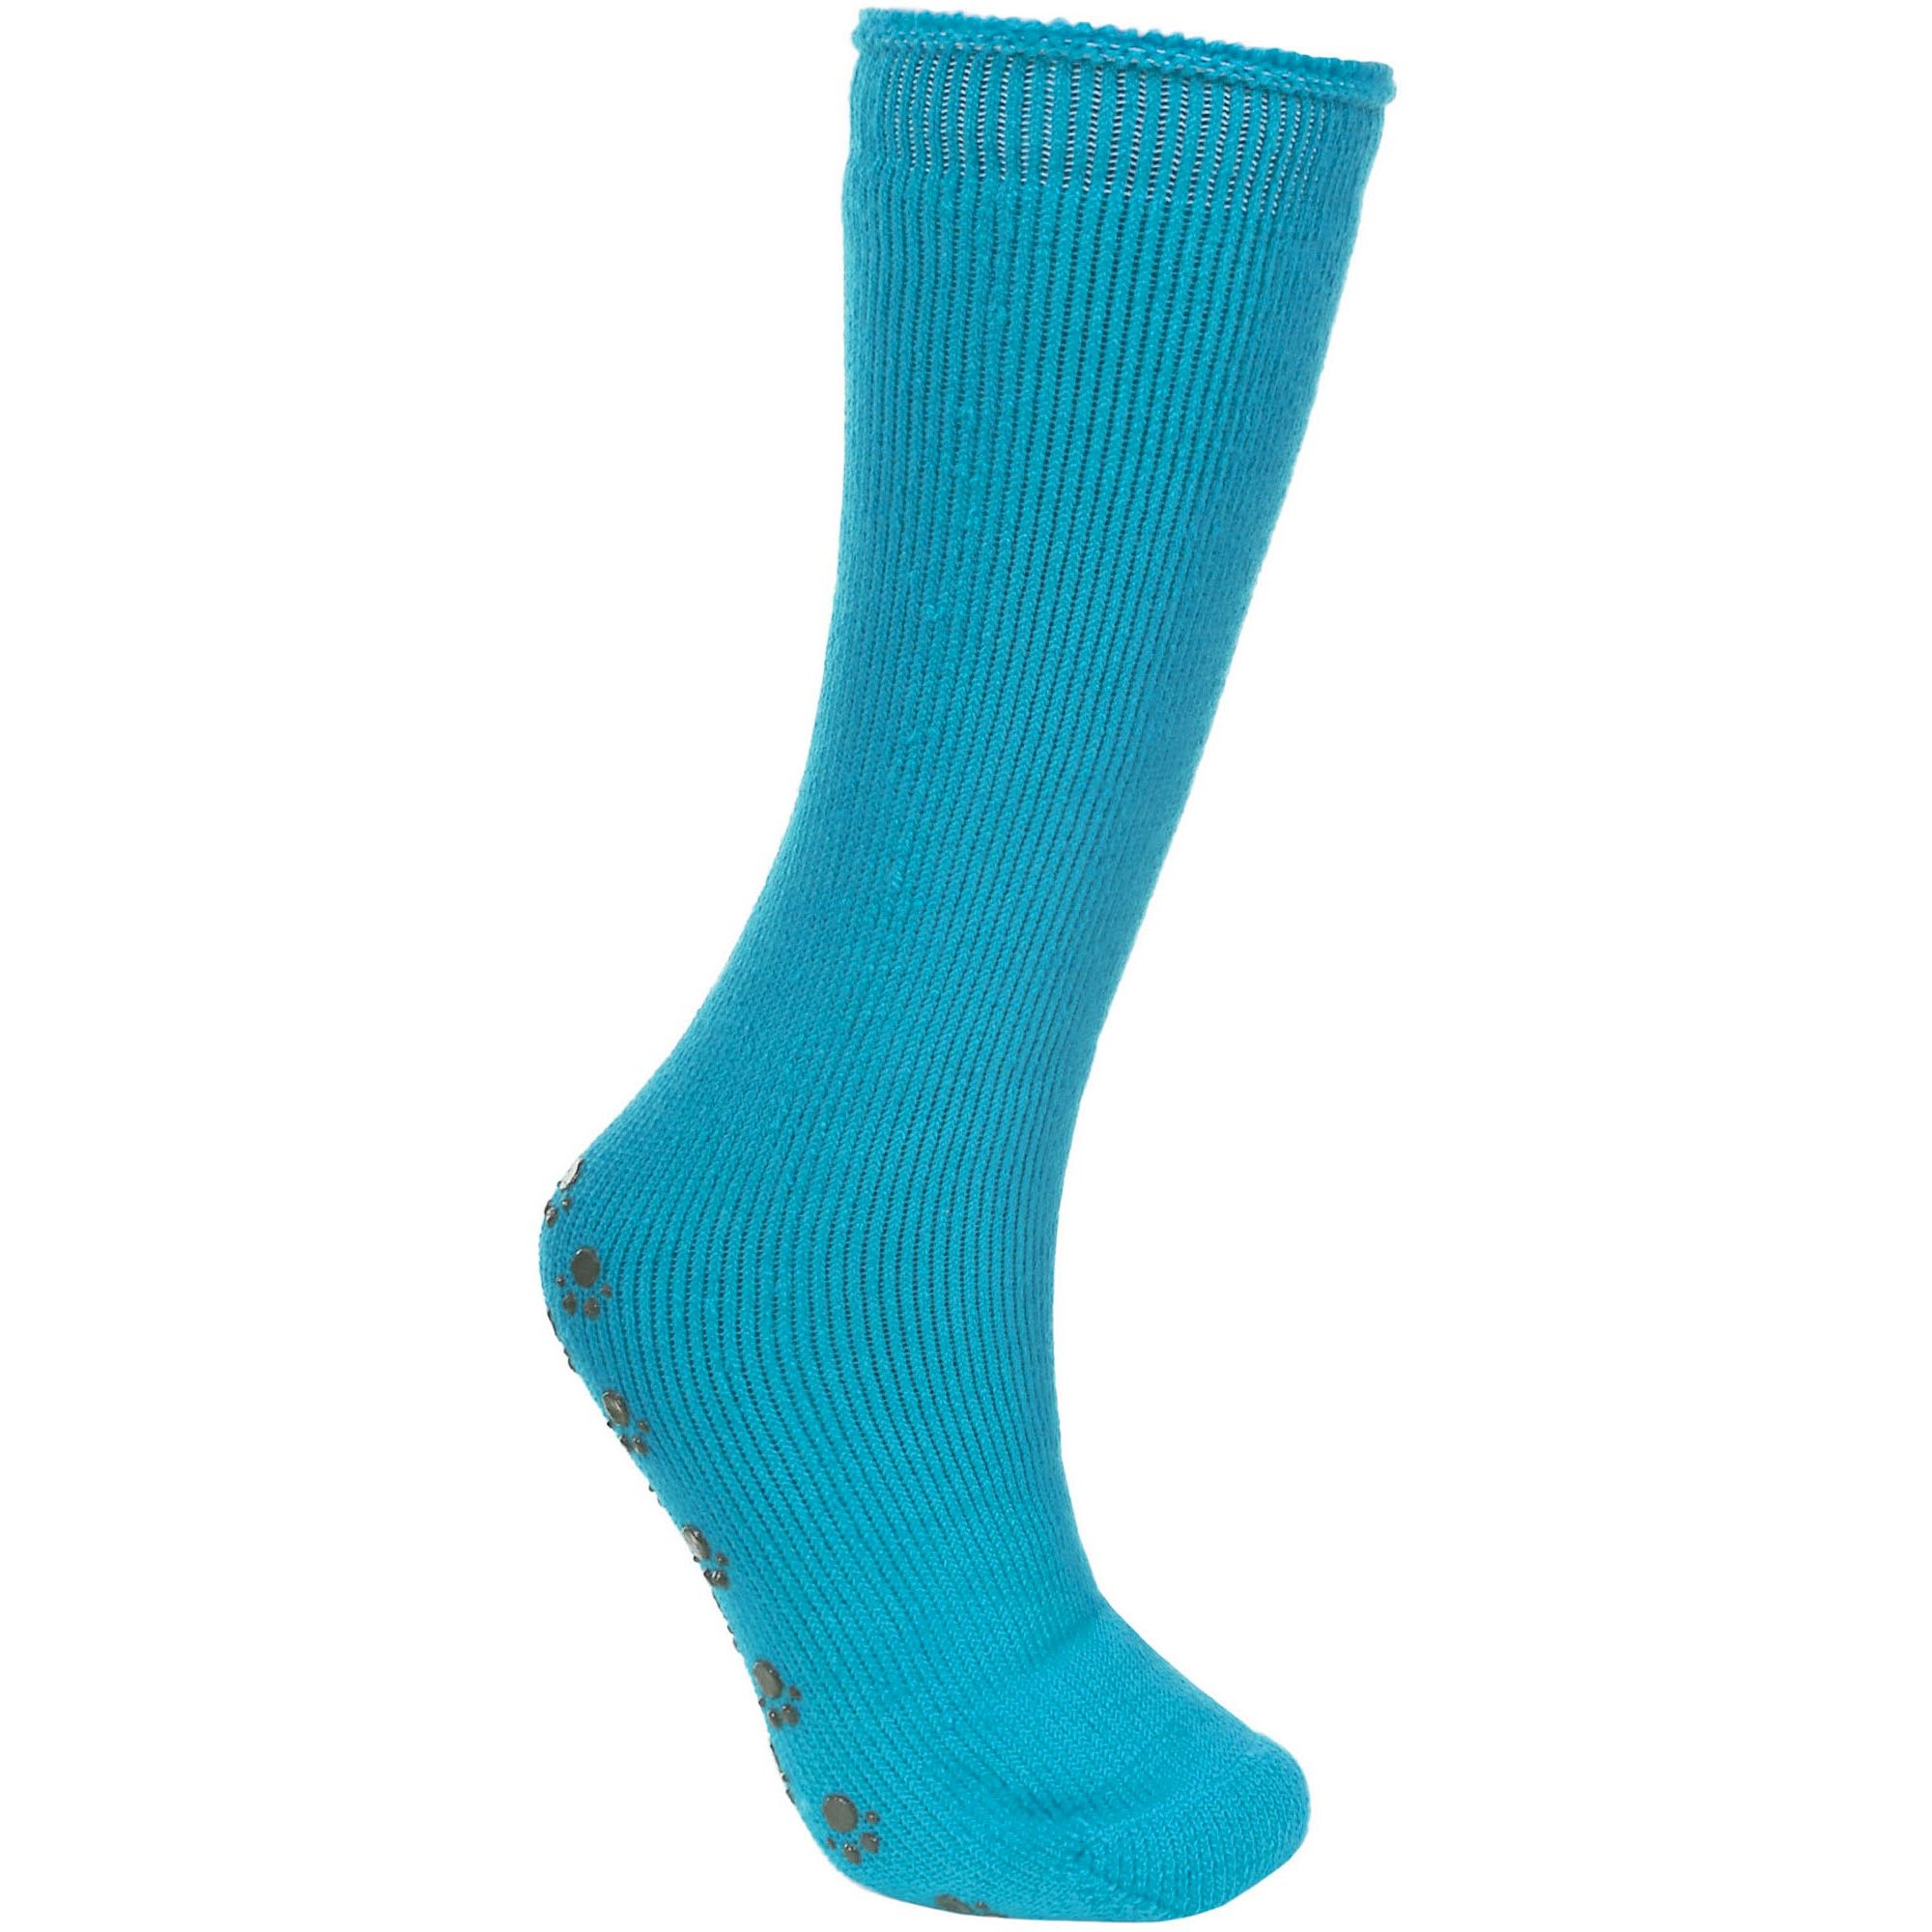 Childrens thermal ski tube socks. Ultra thick. Stick grip sole. 91% Acrylic, 5% Polyamide, 3% Polyester, 1% Elastane. Machine washable.